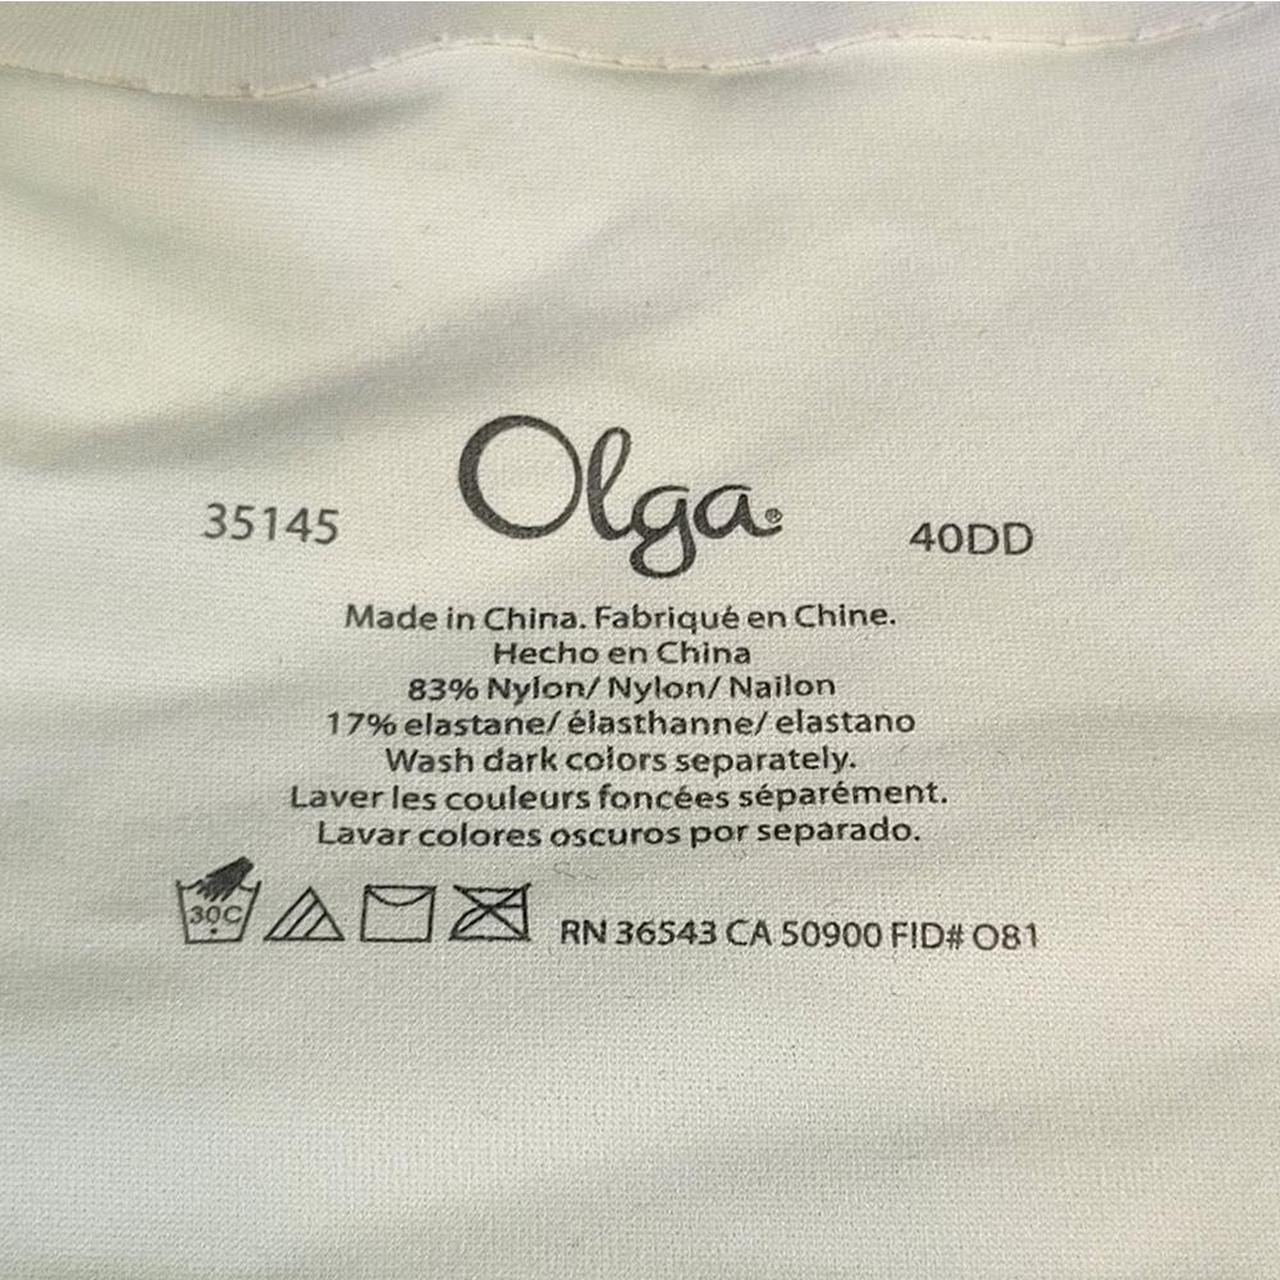 Product Image 4 - Olga bra. Size 40DD. EXCELLENT